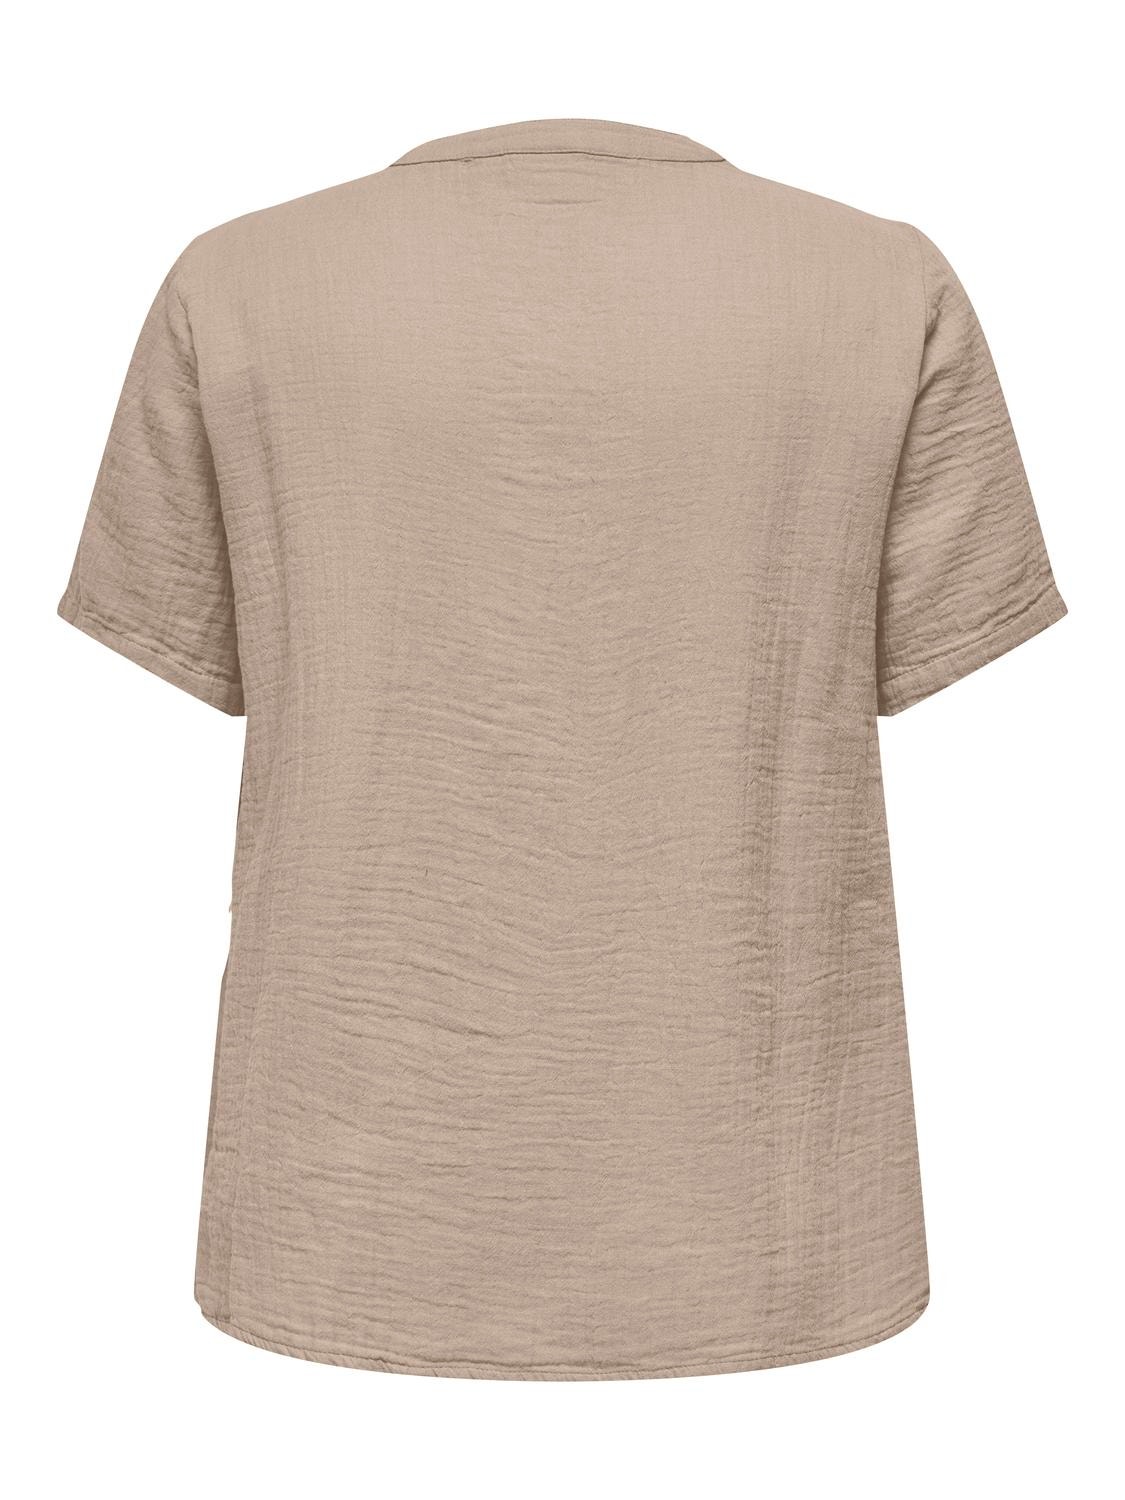 ONLY Short sleeved v-neck shirt -Oxford Tan - 15320513